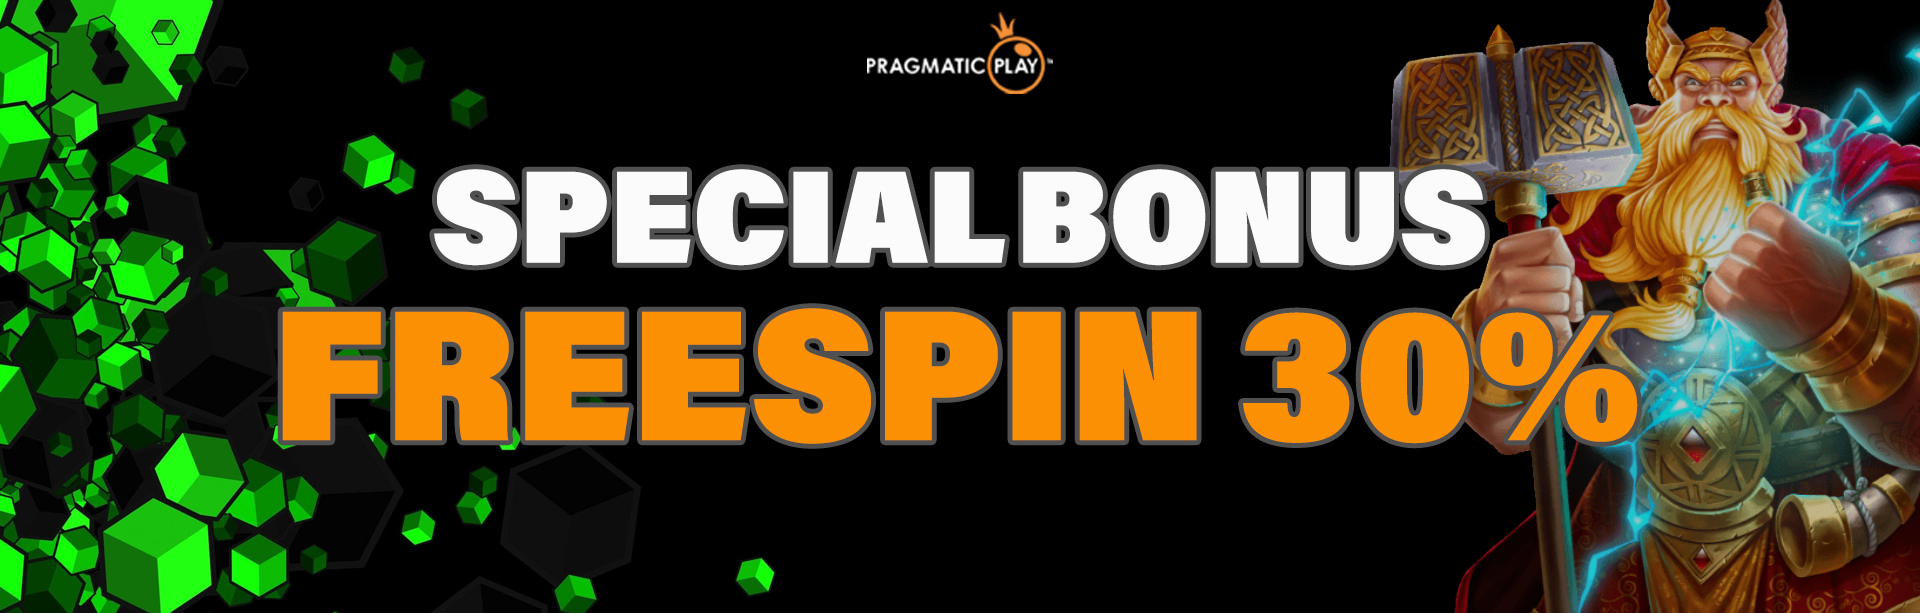 SPECIAL BONUS FREESPIN 30%